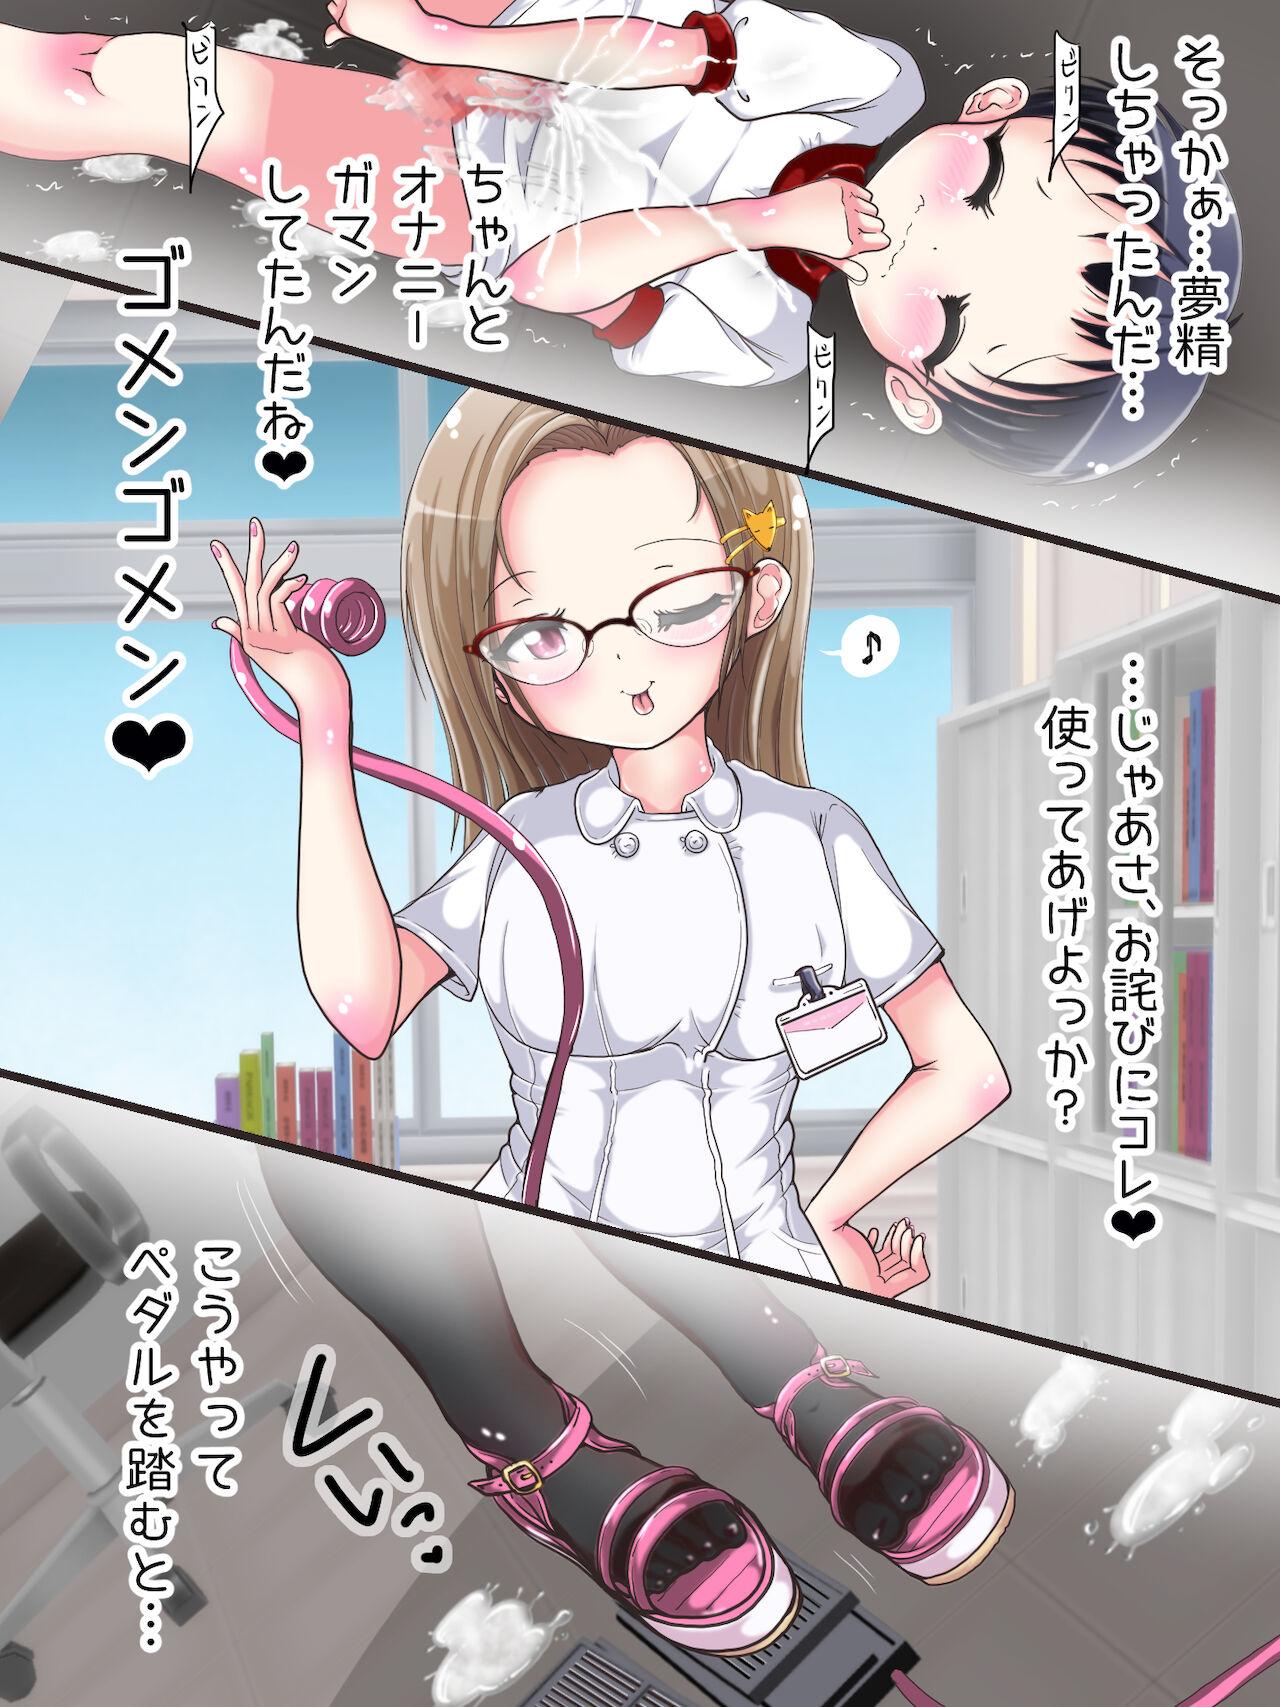 [Oneashi] One-Shota Footjob Lessons: Foot-Stroked by Nurses 245